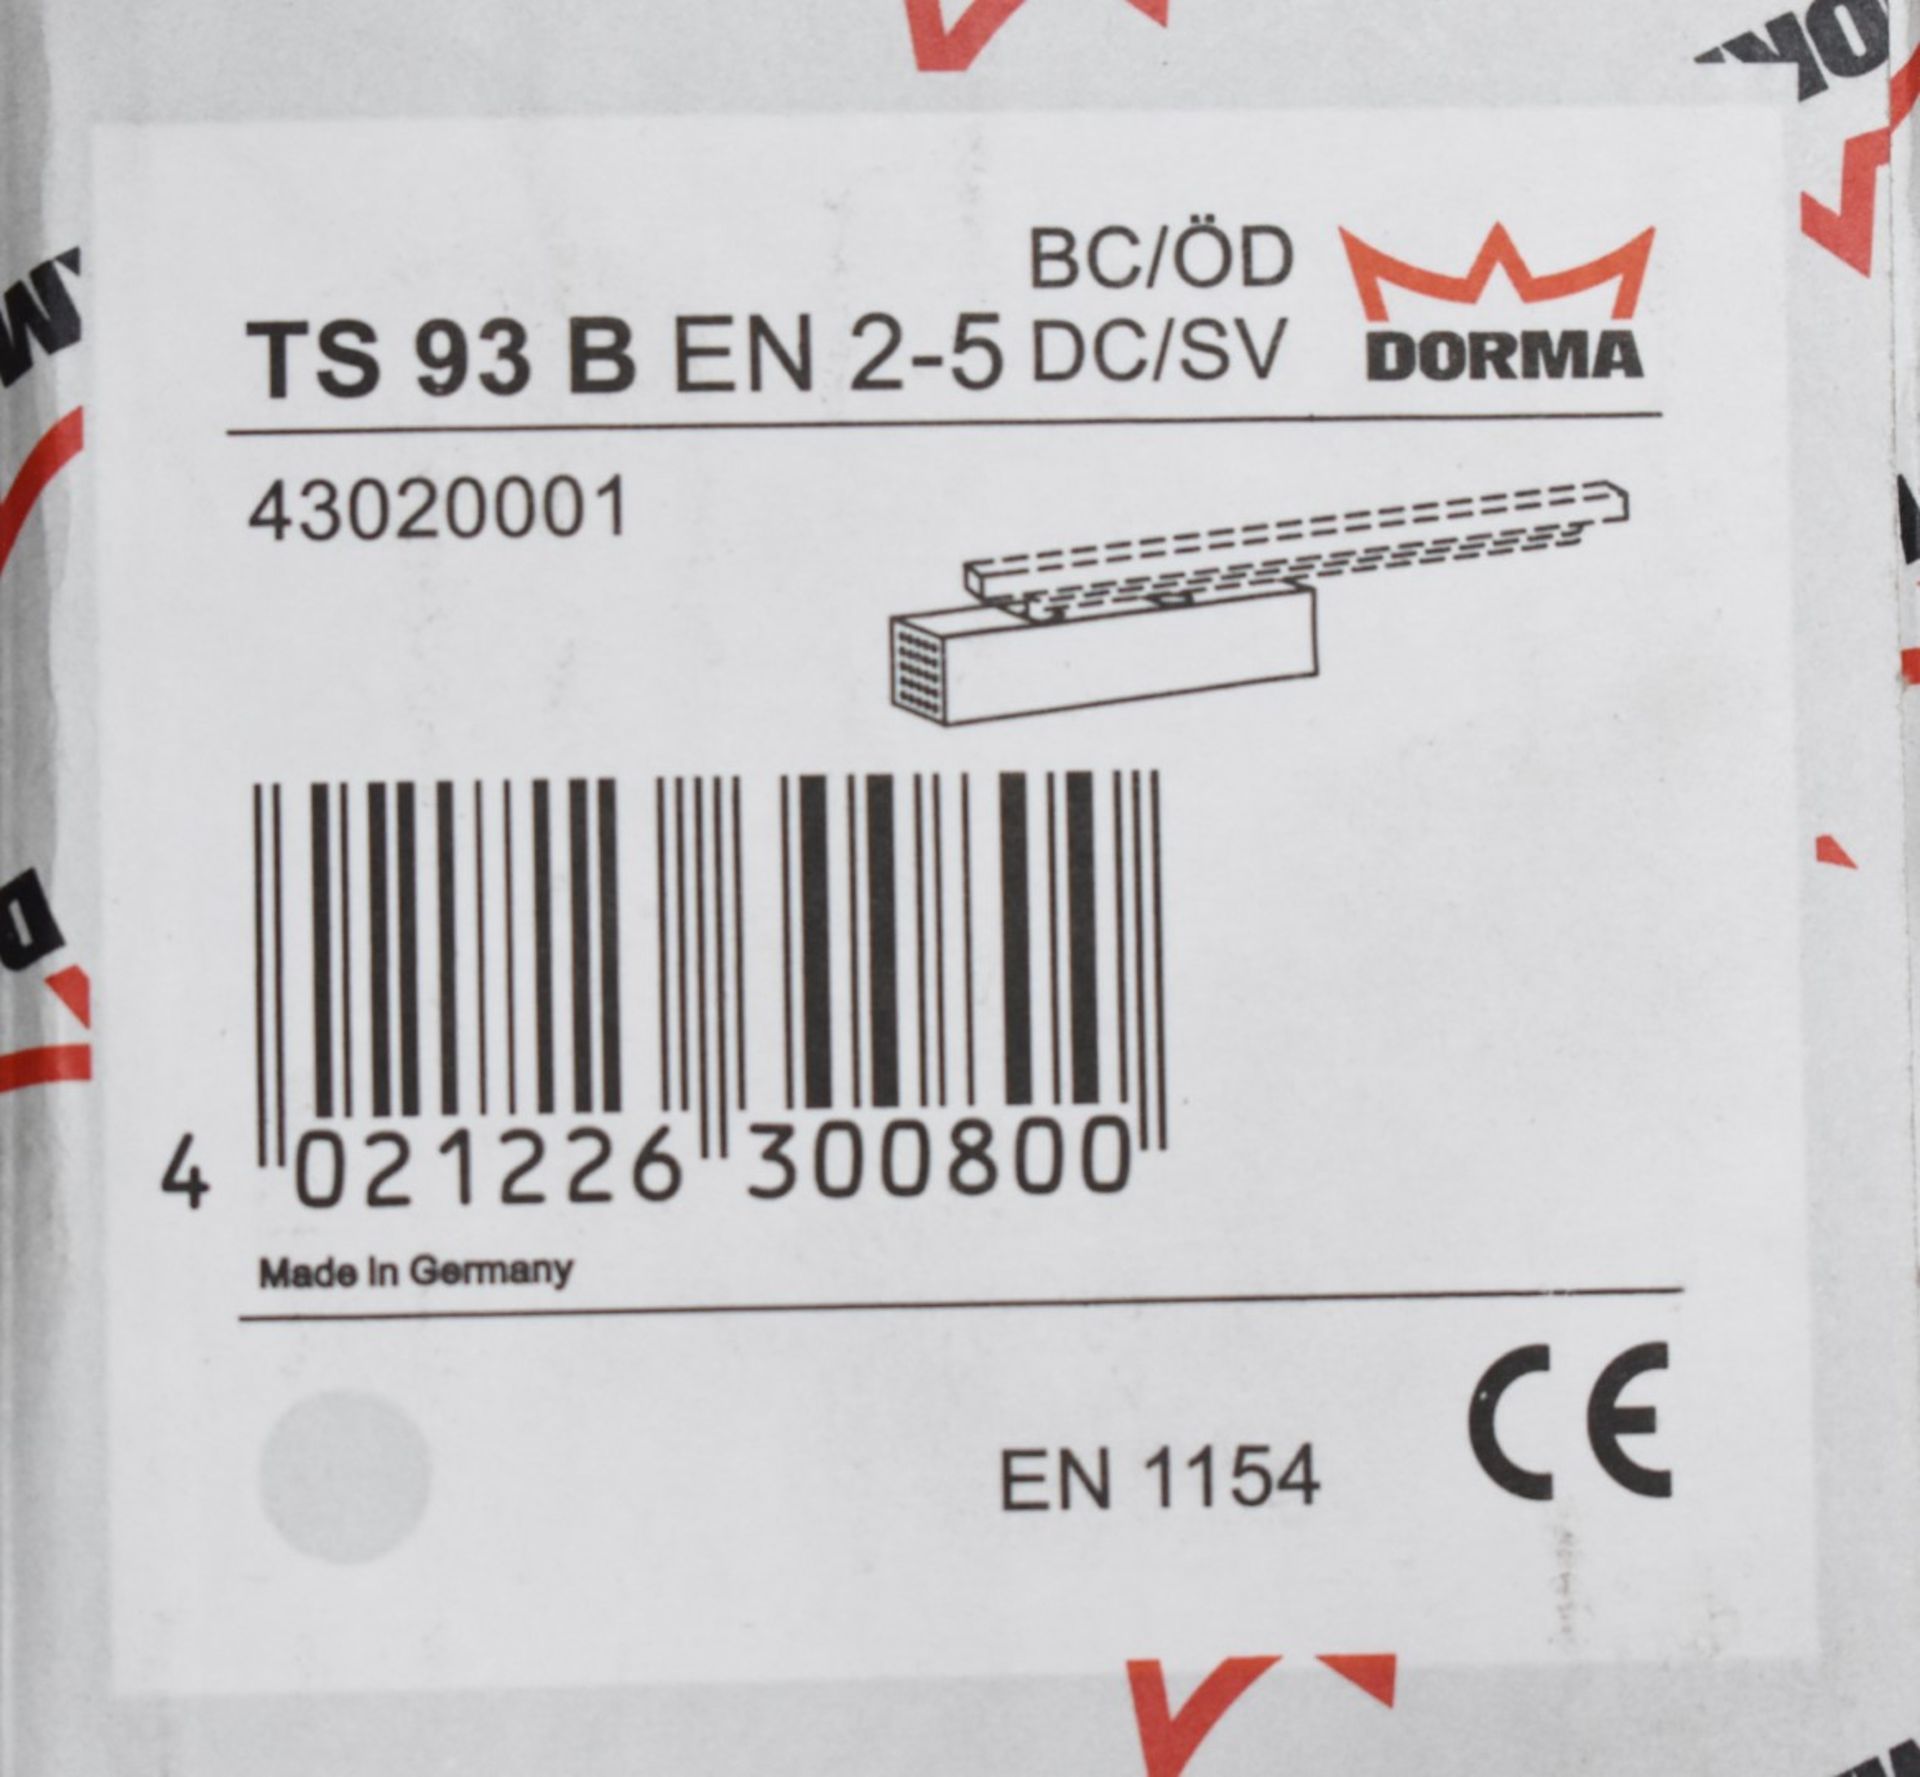 1 x Dorma TS93B Door Closer DC/SV - Silver Finish - EN 2-5 - Brand New Stock - Product Code 42020001 - Image 2 of 2